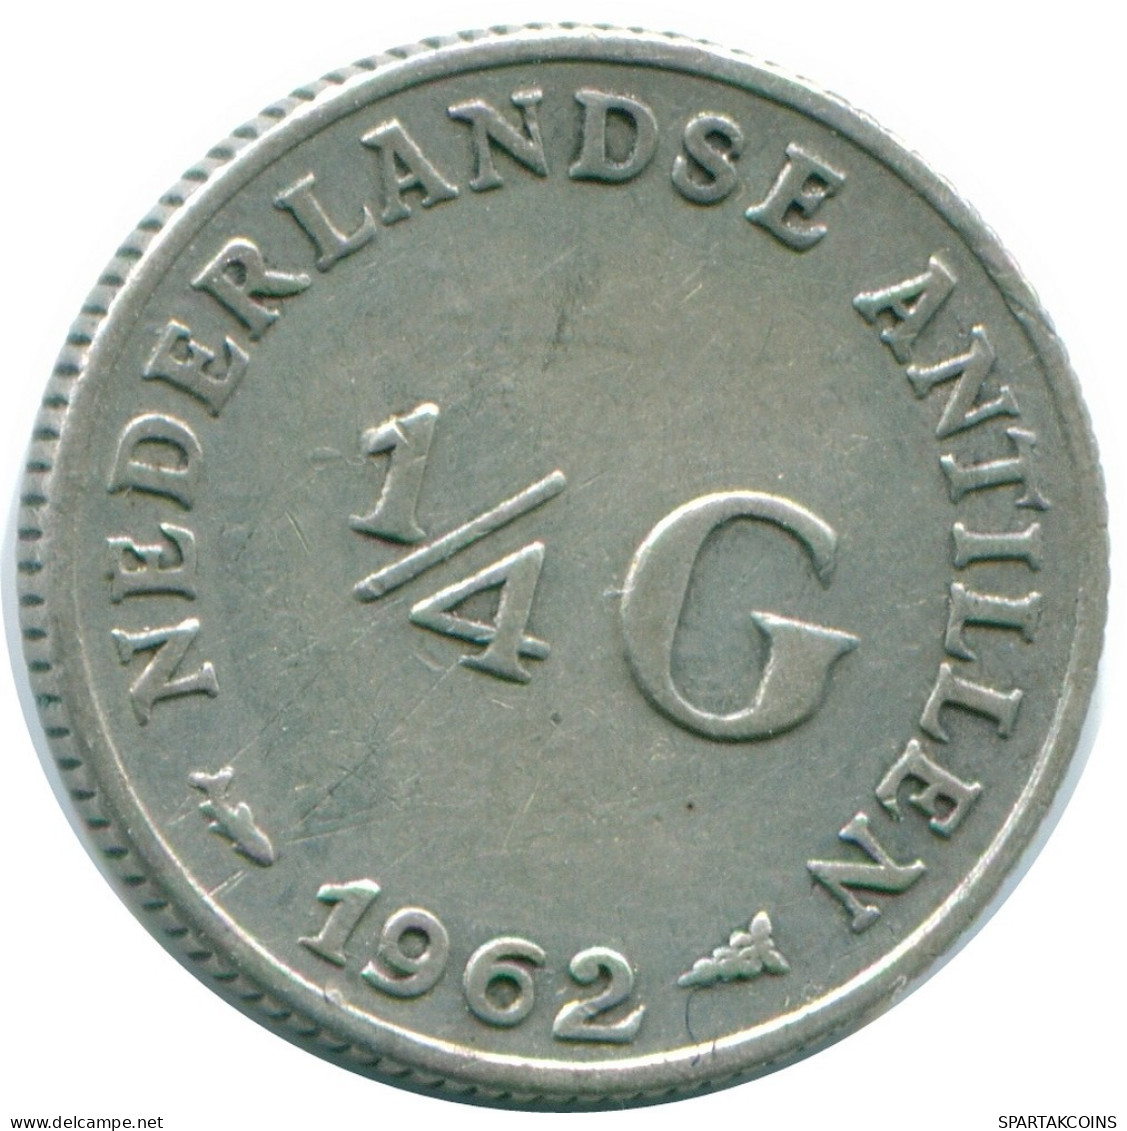 1/4 GULDEN 1962 NIEDERLÄNDISCHE ANTILLEN SILBER Koloniale Münze #NL11122.4.D.A - Netherlands Antilles